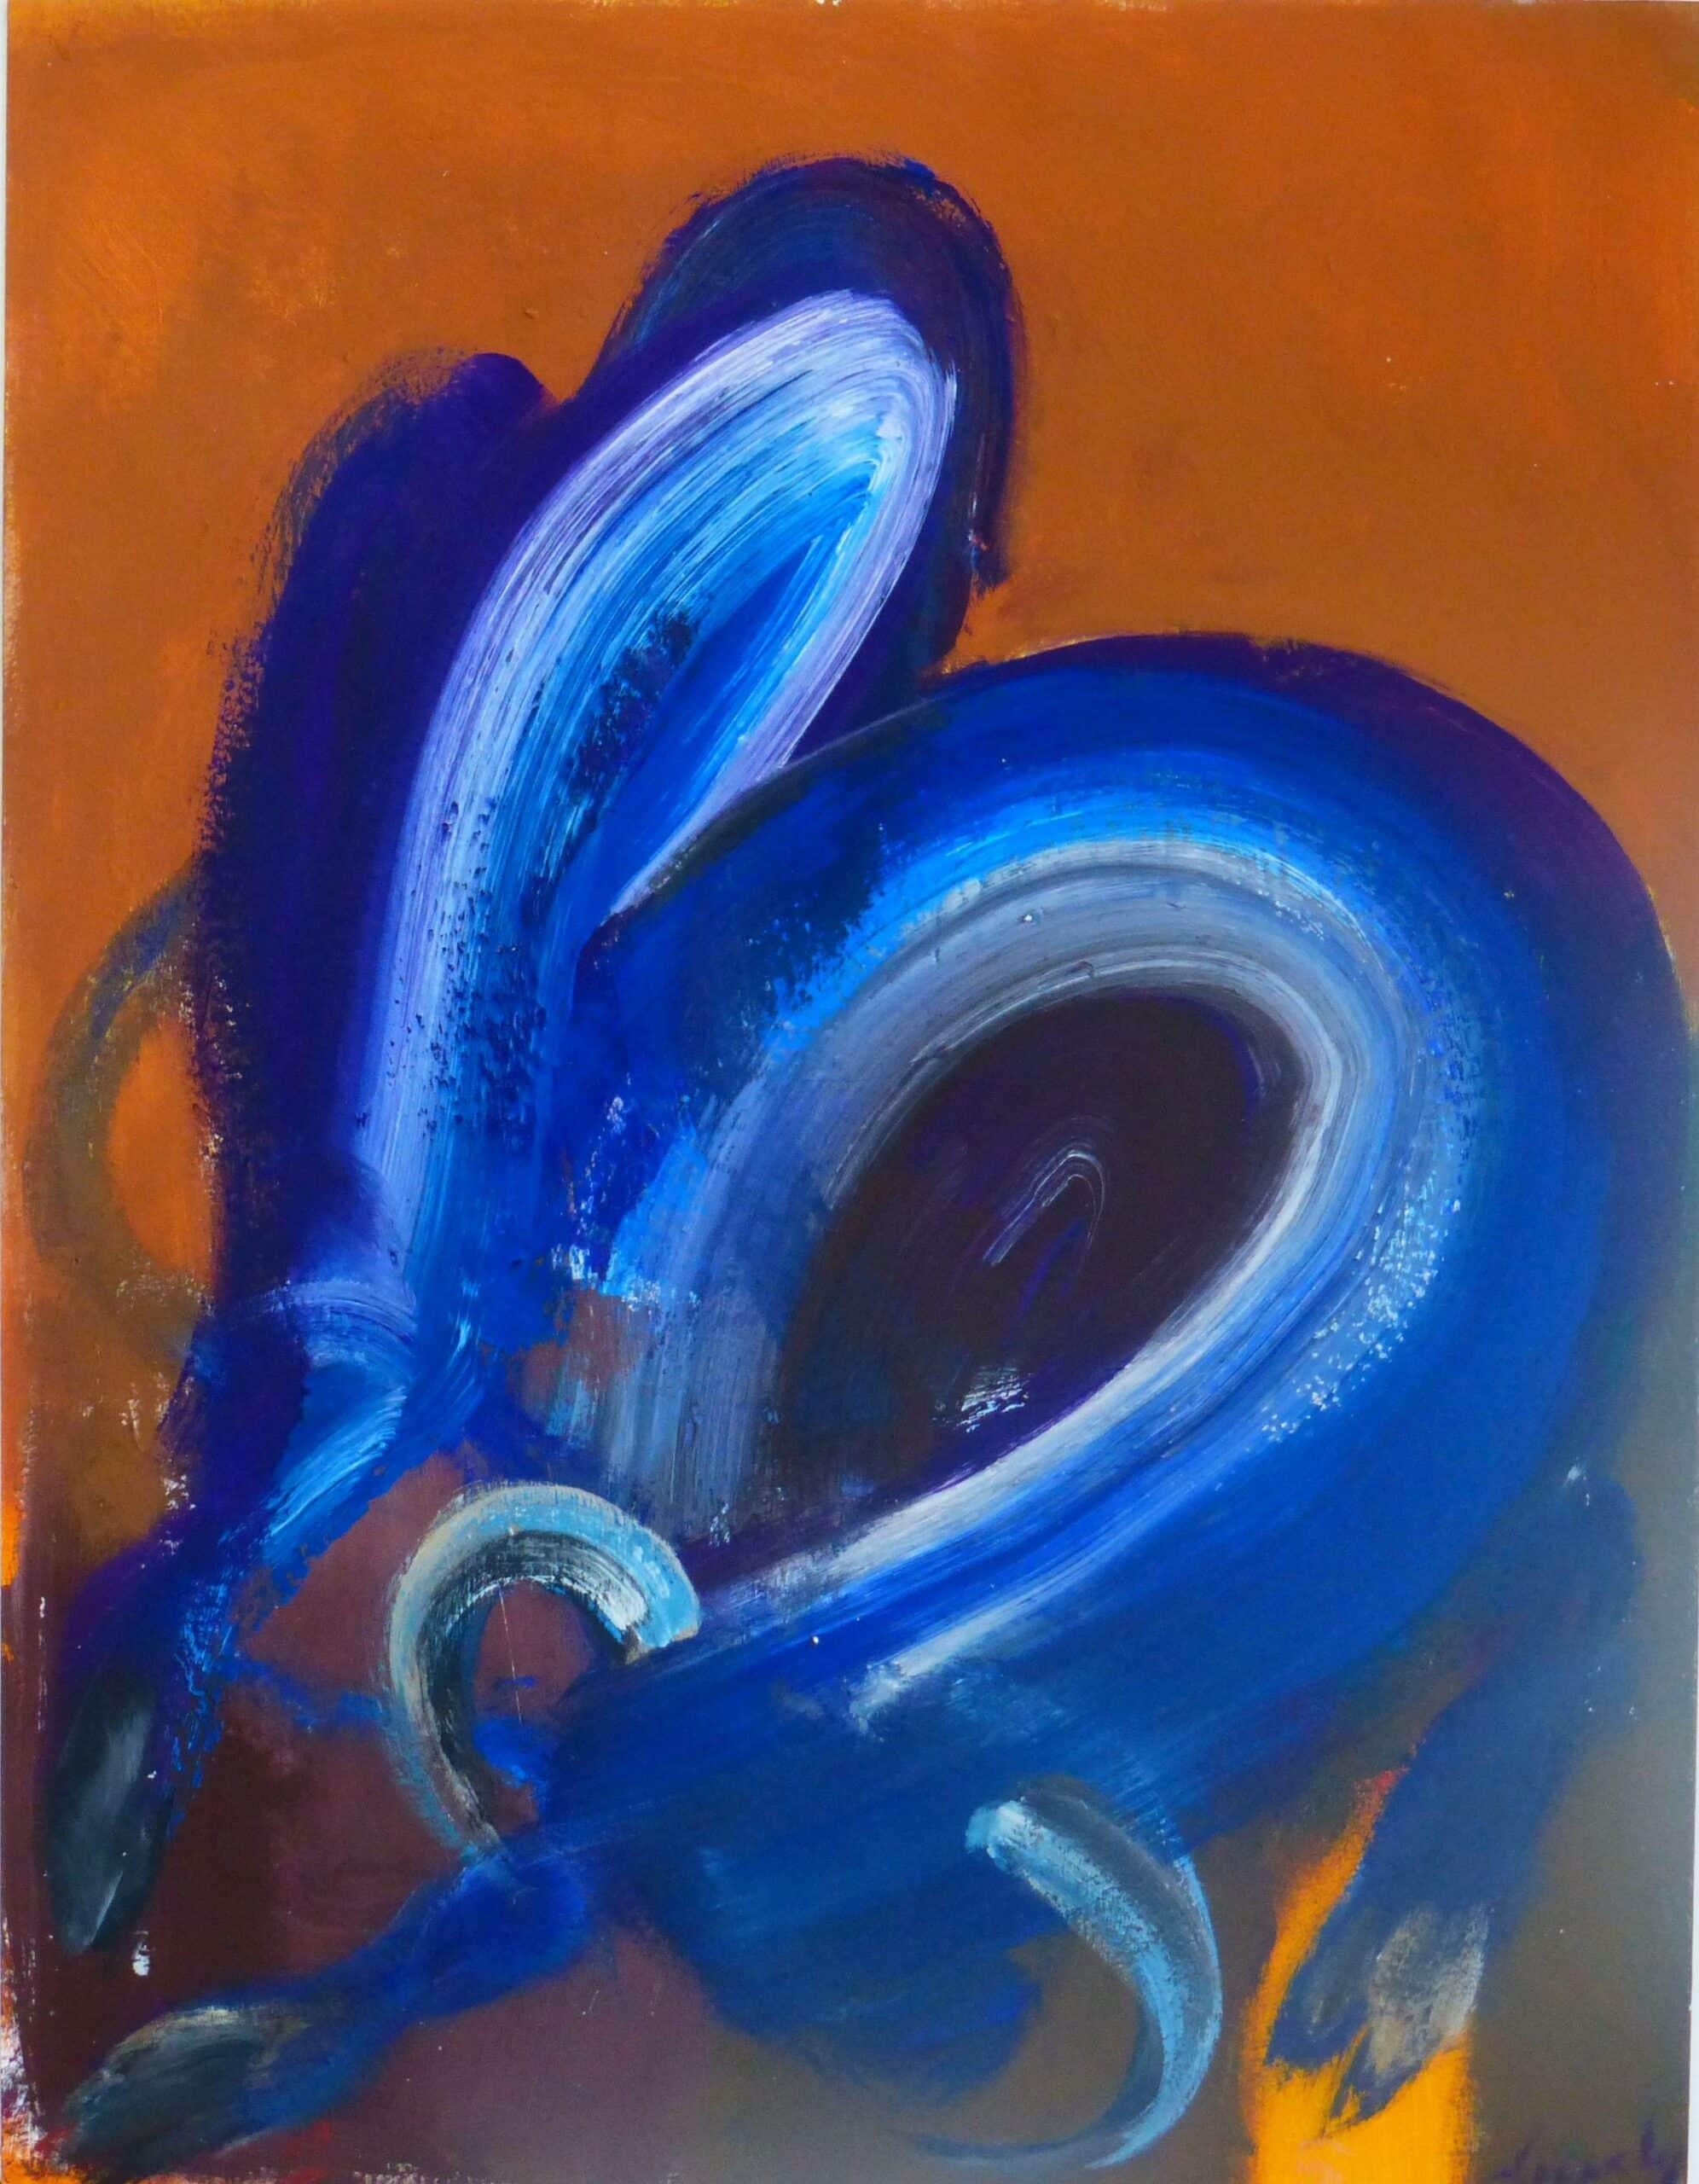 Taureau XI by Christophe Dupety - Animal painting, abstract, blue, orange, vivid